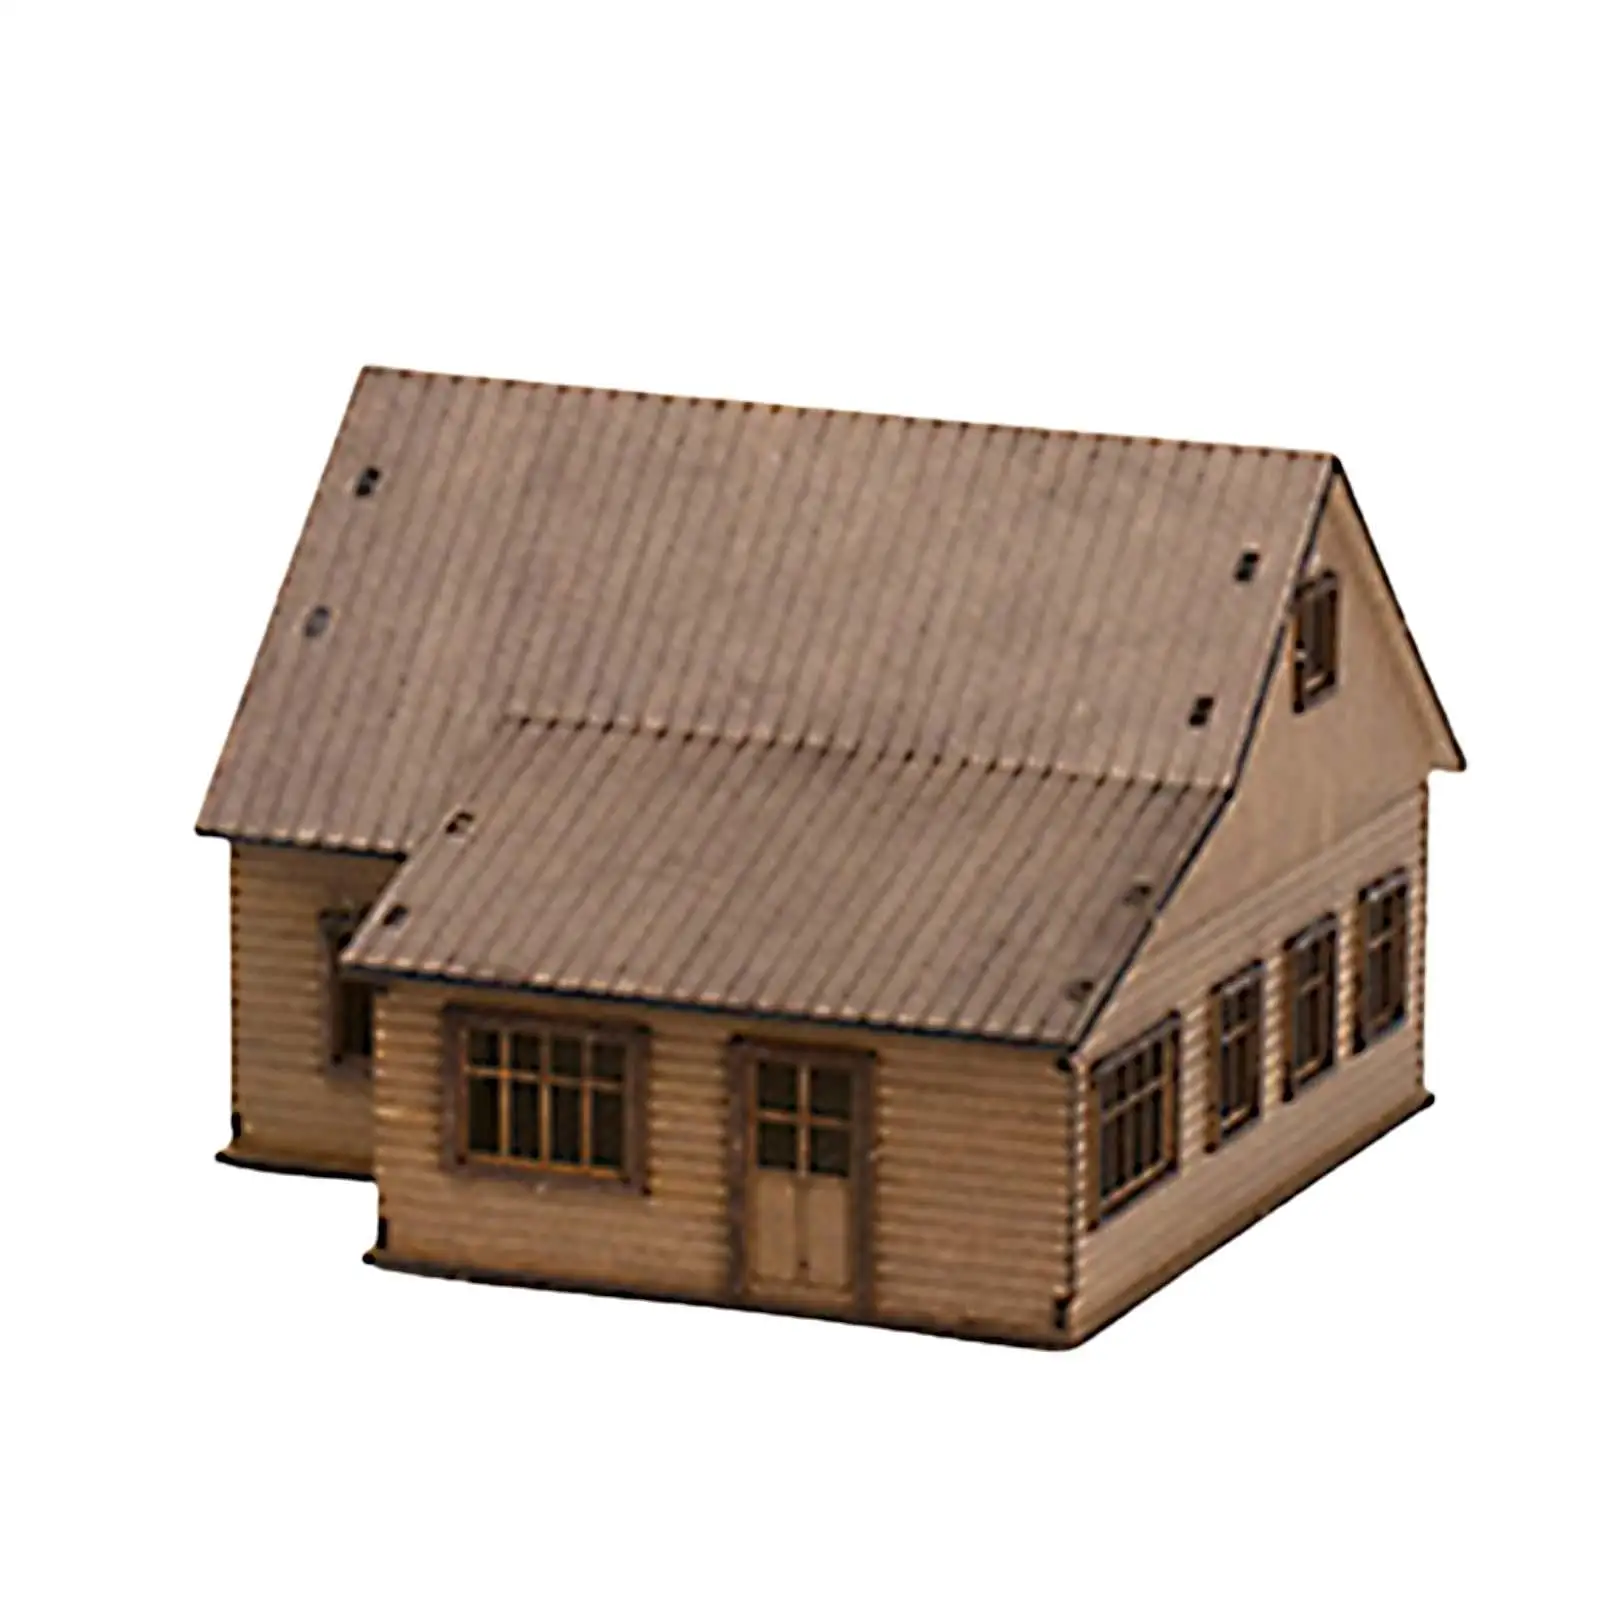 1/72 Wooden Building Model Kits Unassembly for Model Railway Scene